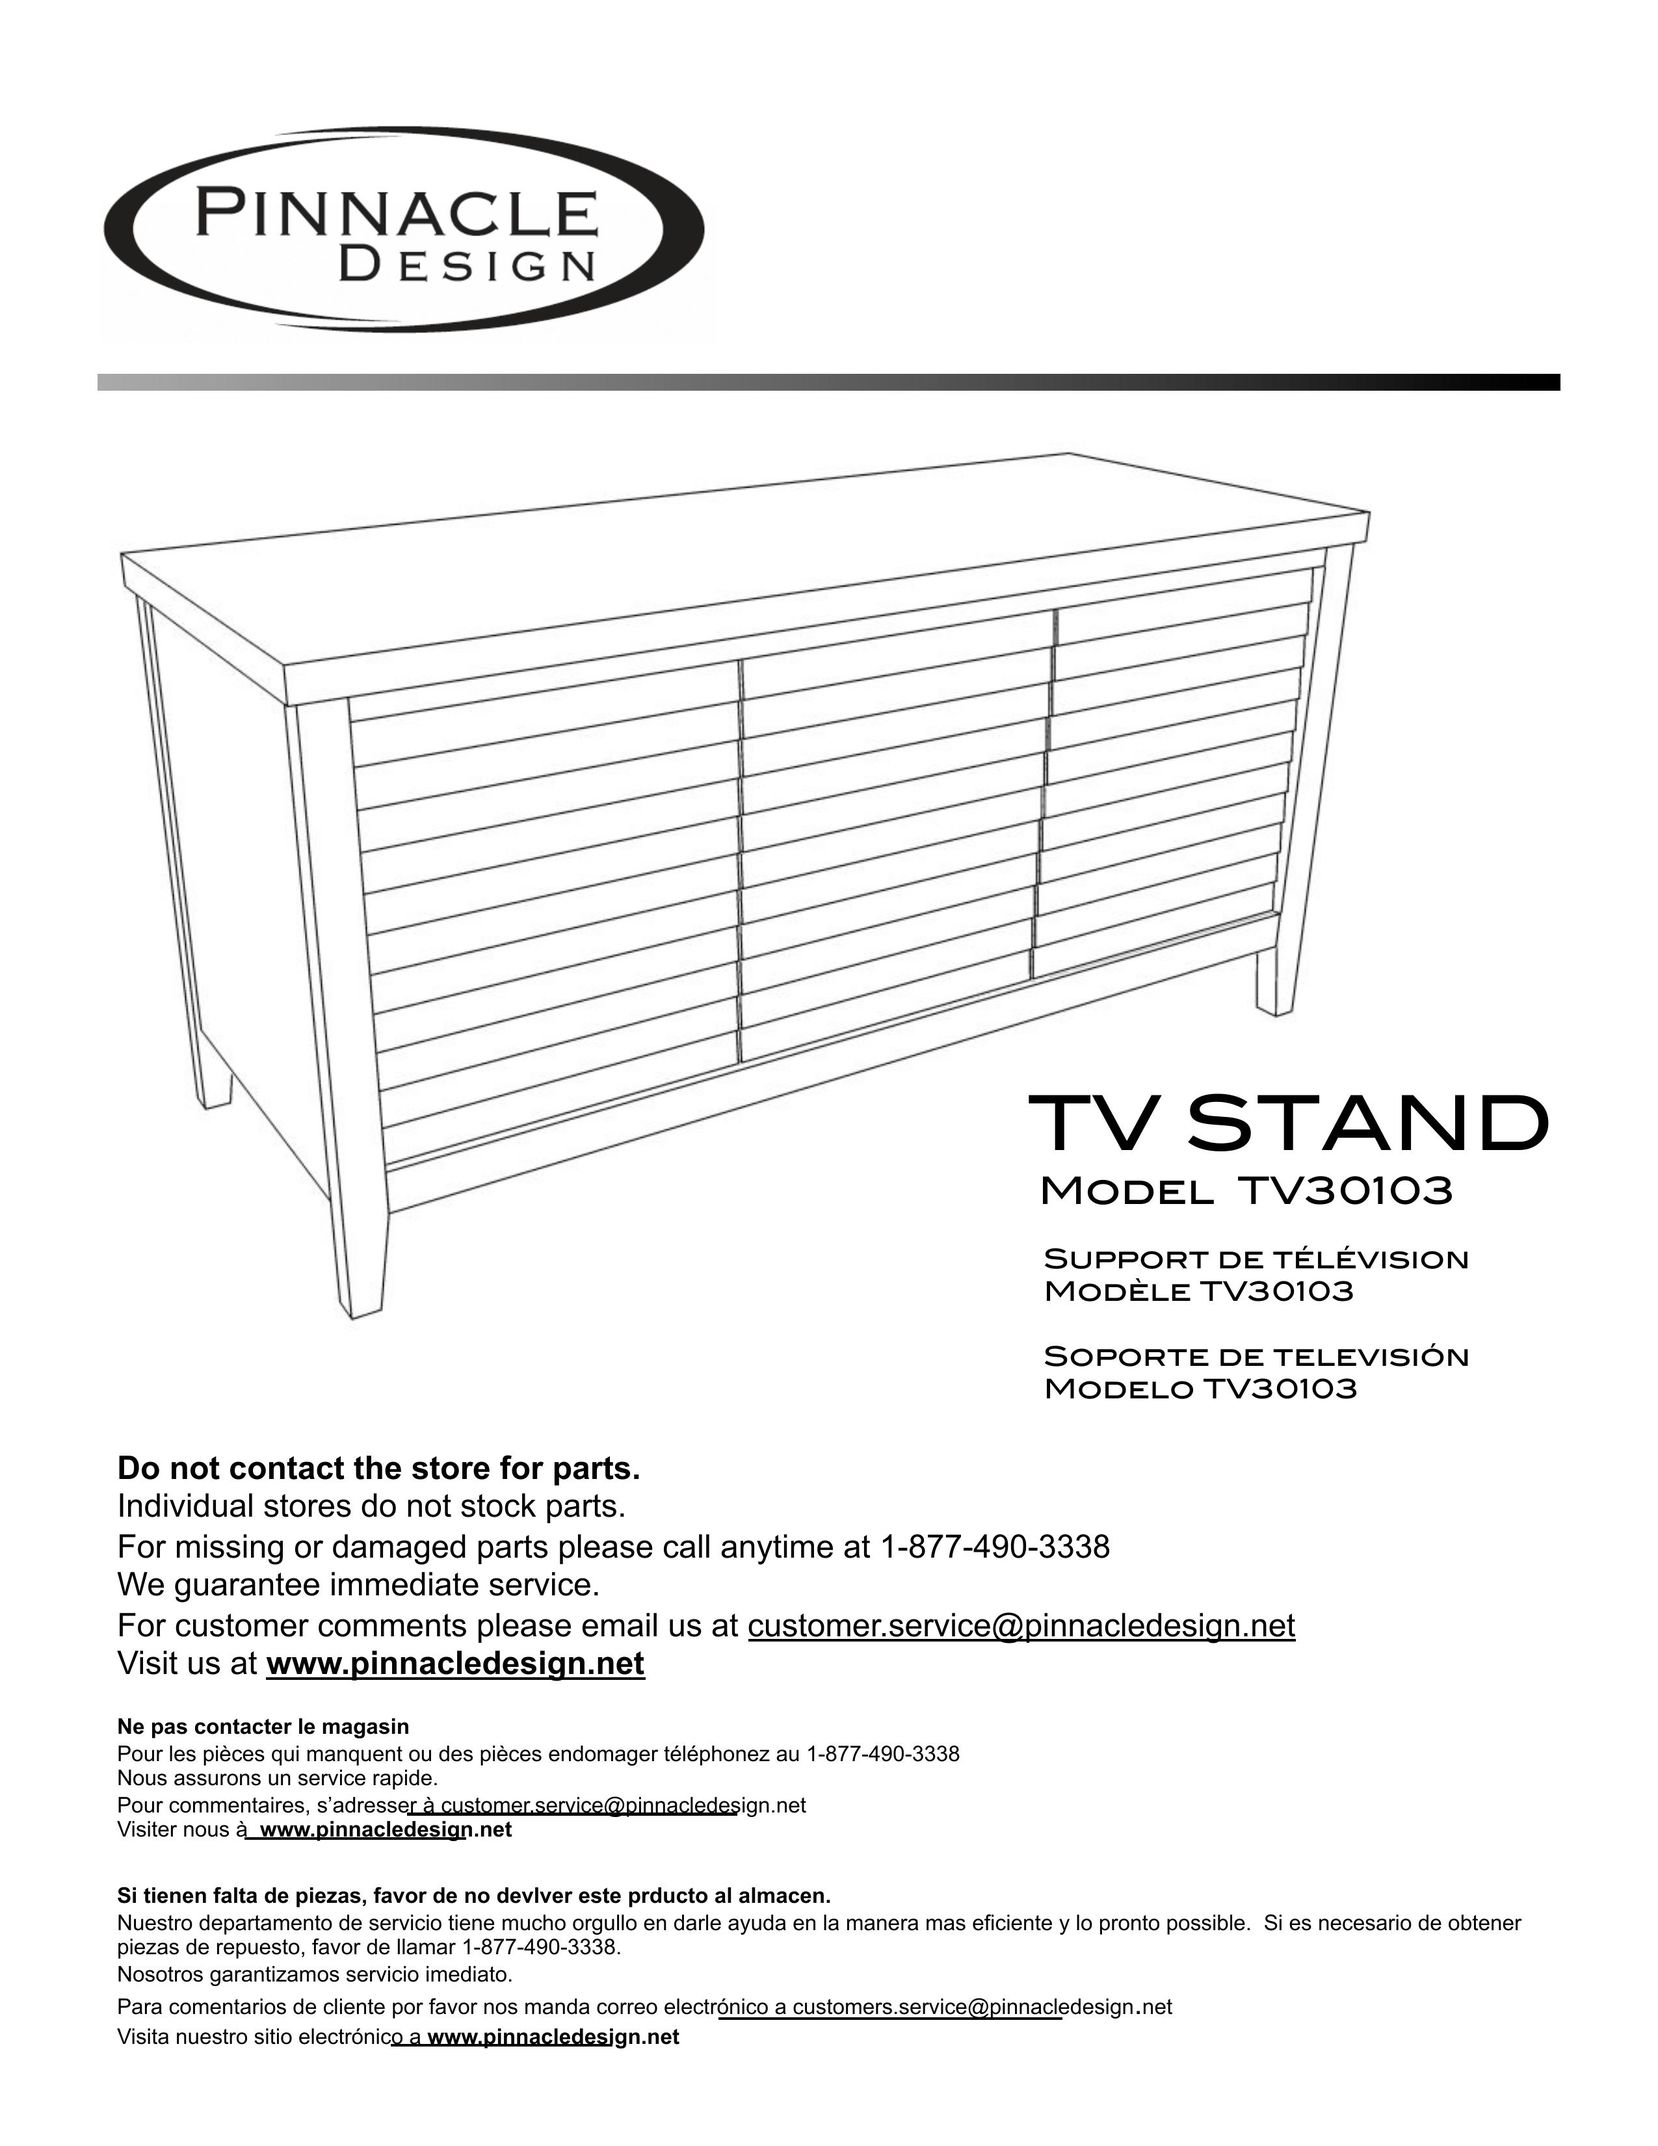 Pinnacle Design TV30103 TV Video Accessories User Manual